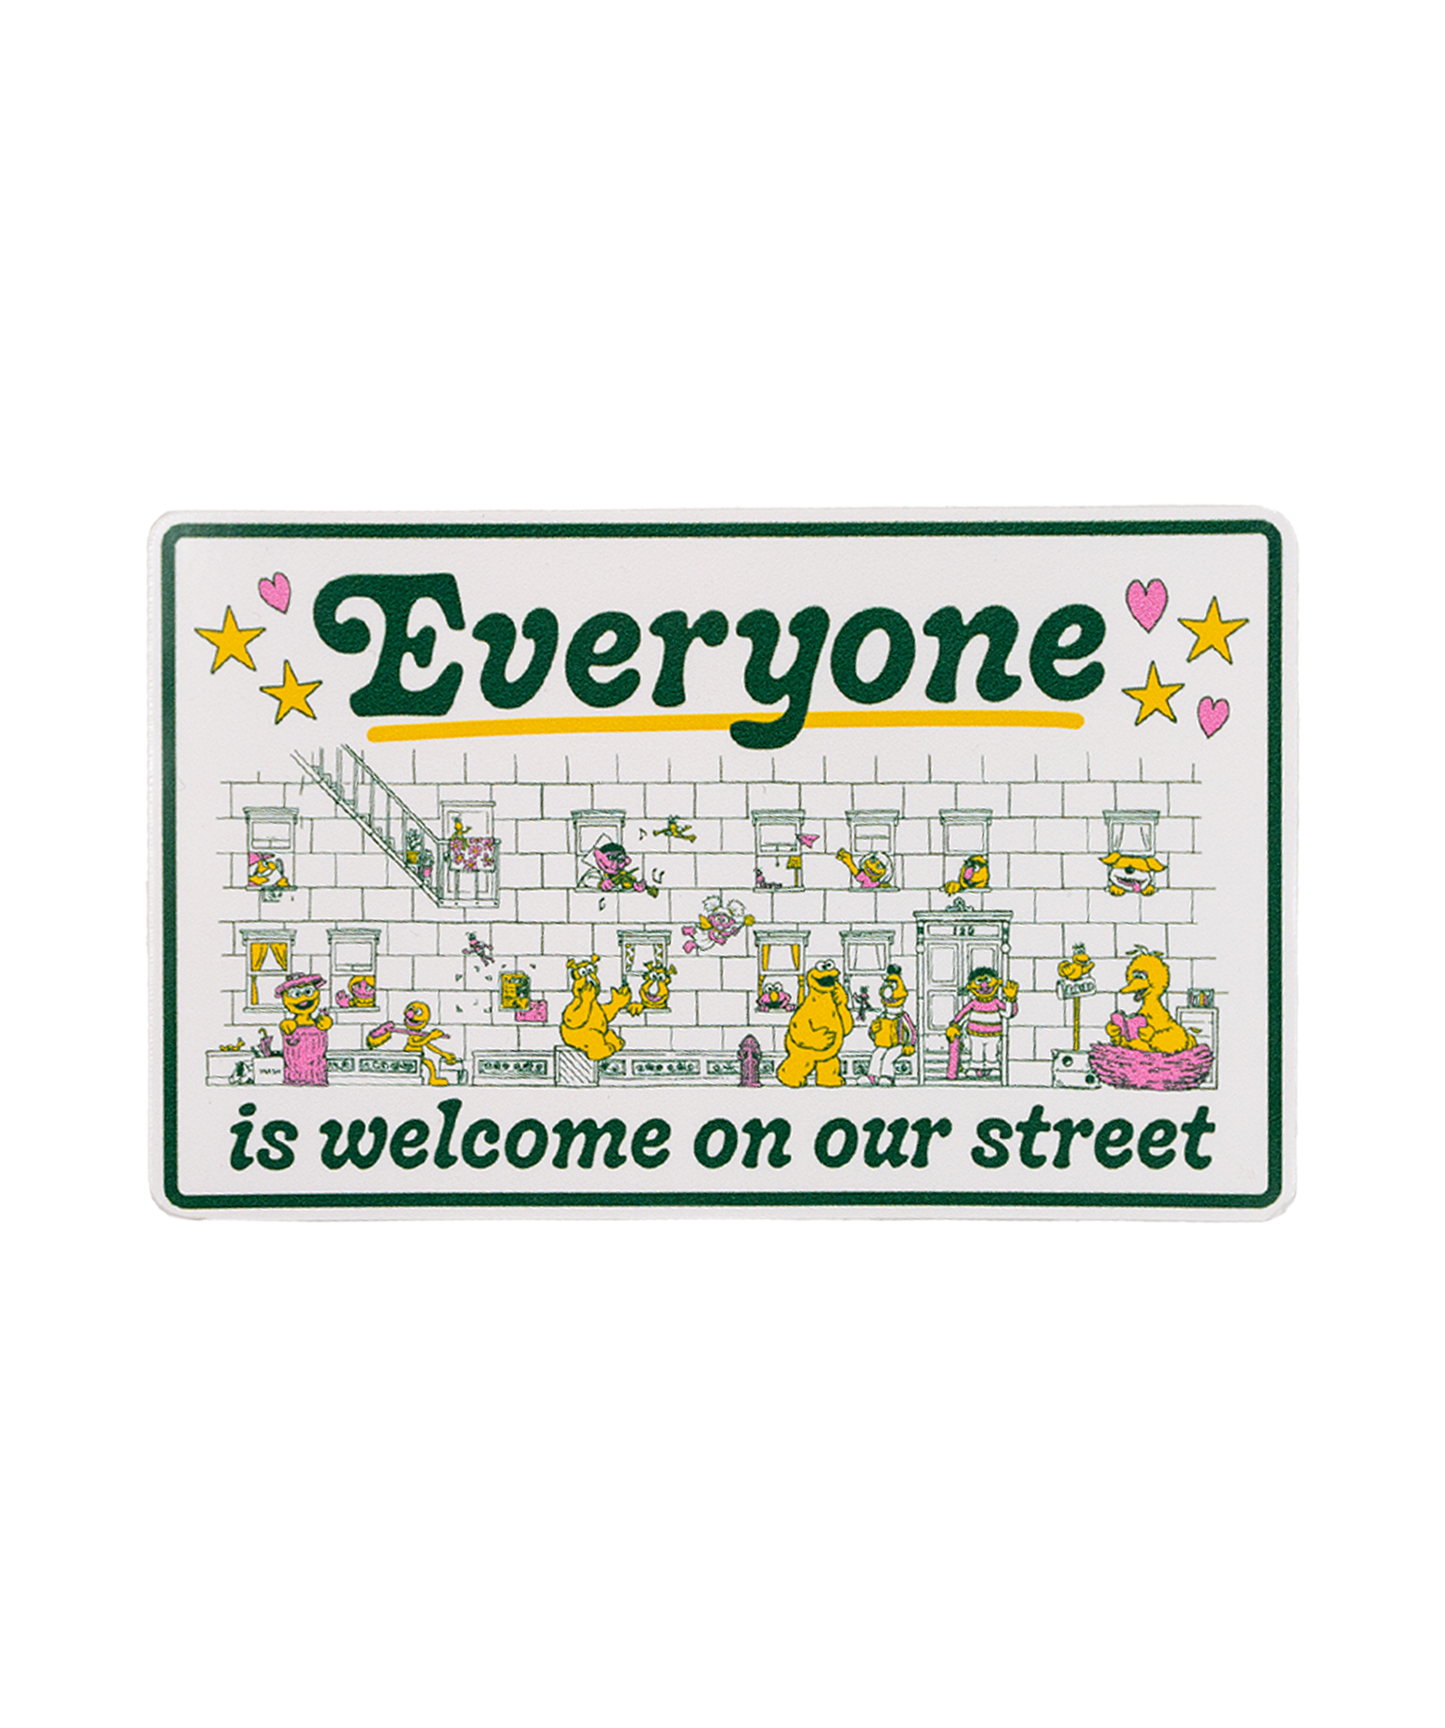 Celebrate Everyone Sticker Pack • Sesame Street x Oxford Pennant